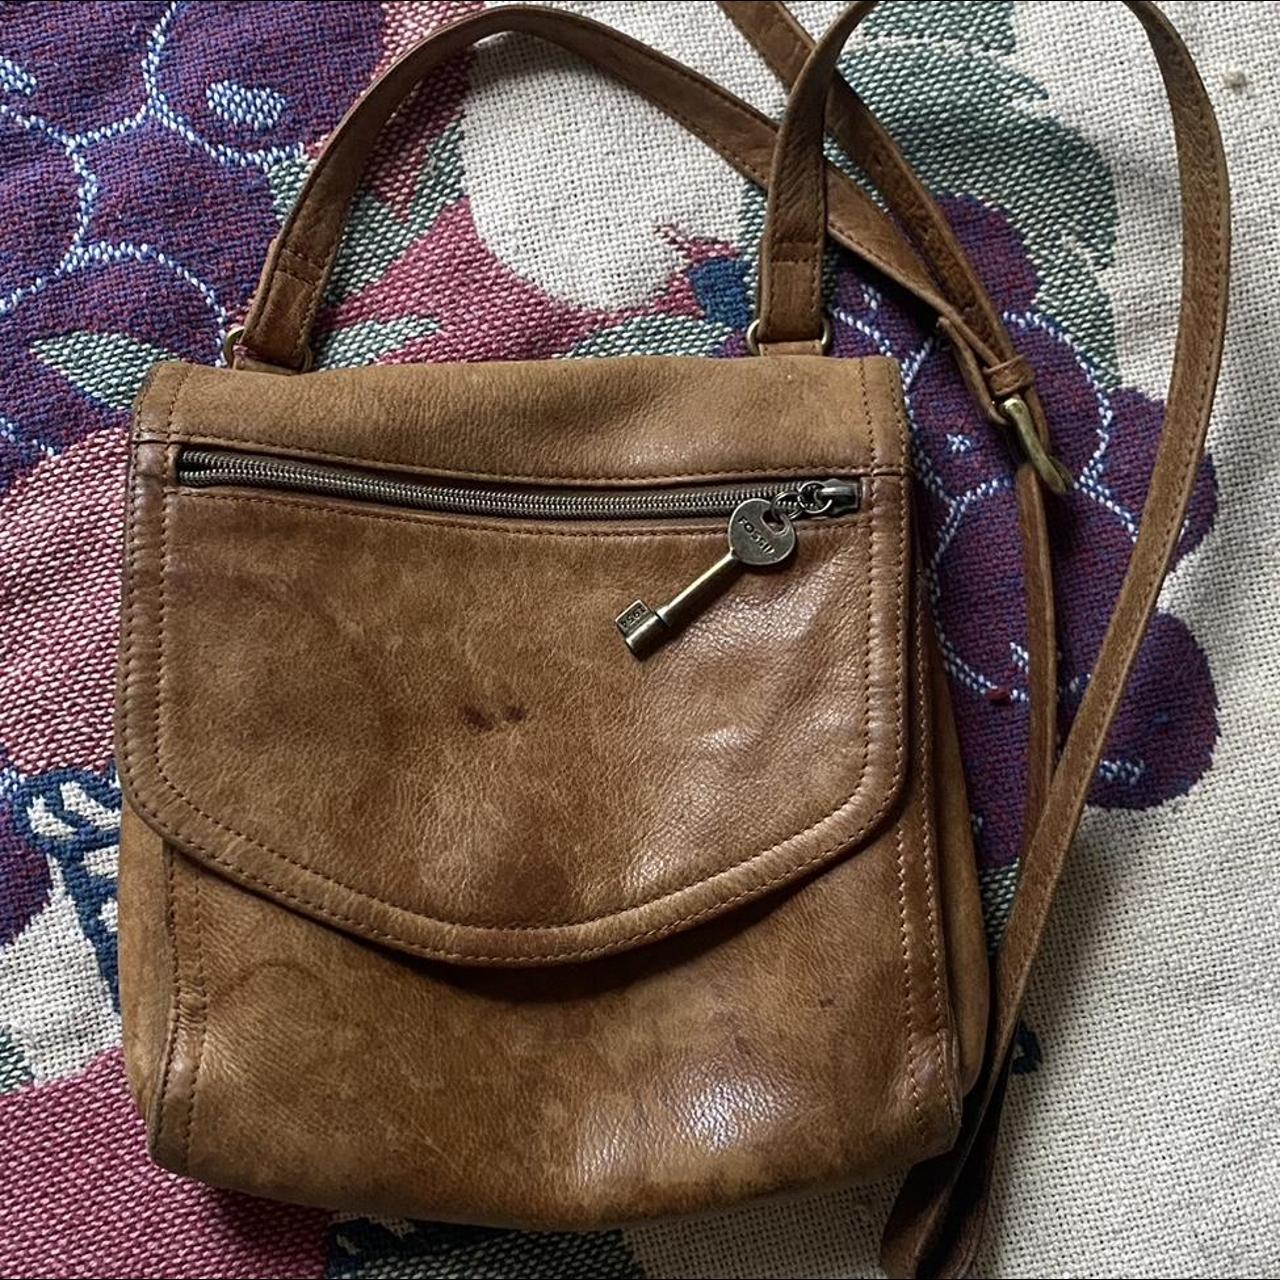 Fossil Classic # 75082 Leather Purse Handbag | Leather purses, Purses and  handbags, Handbag